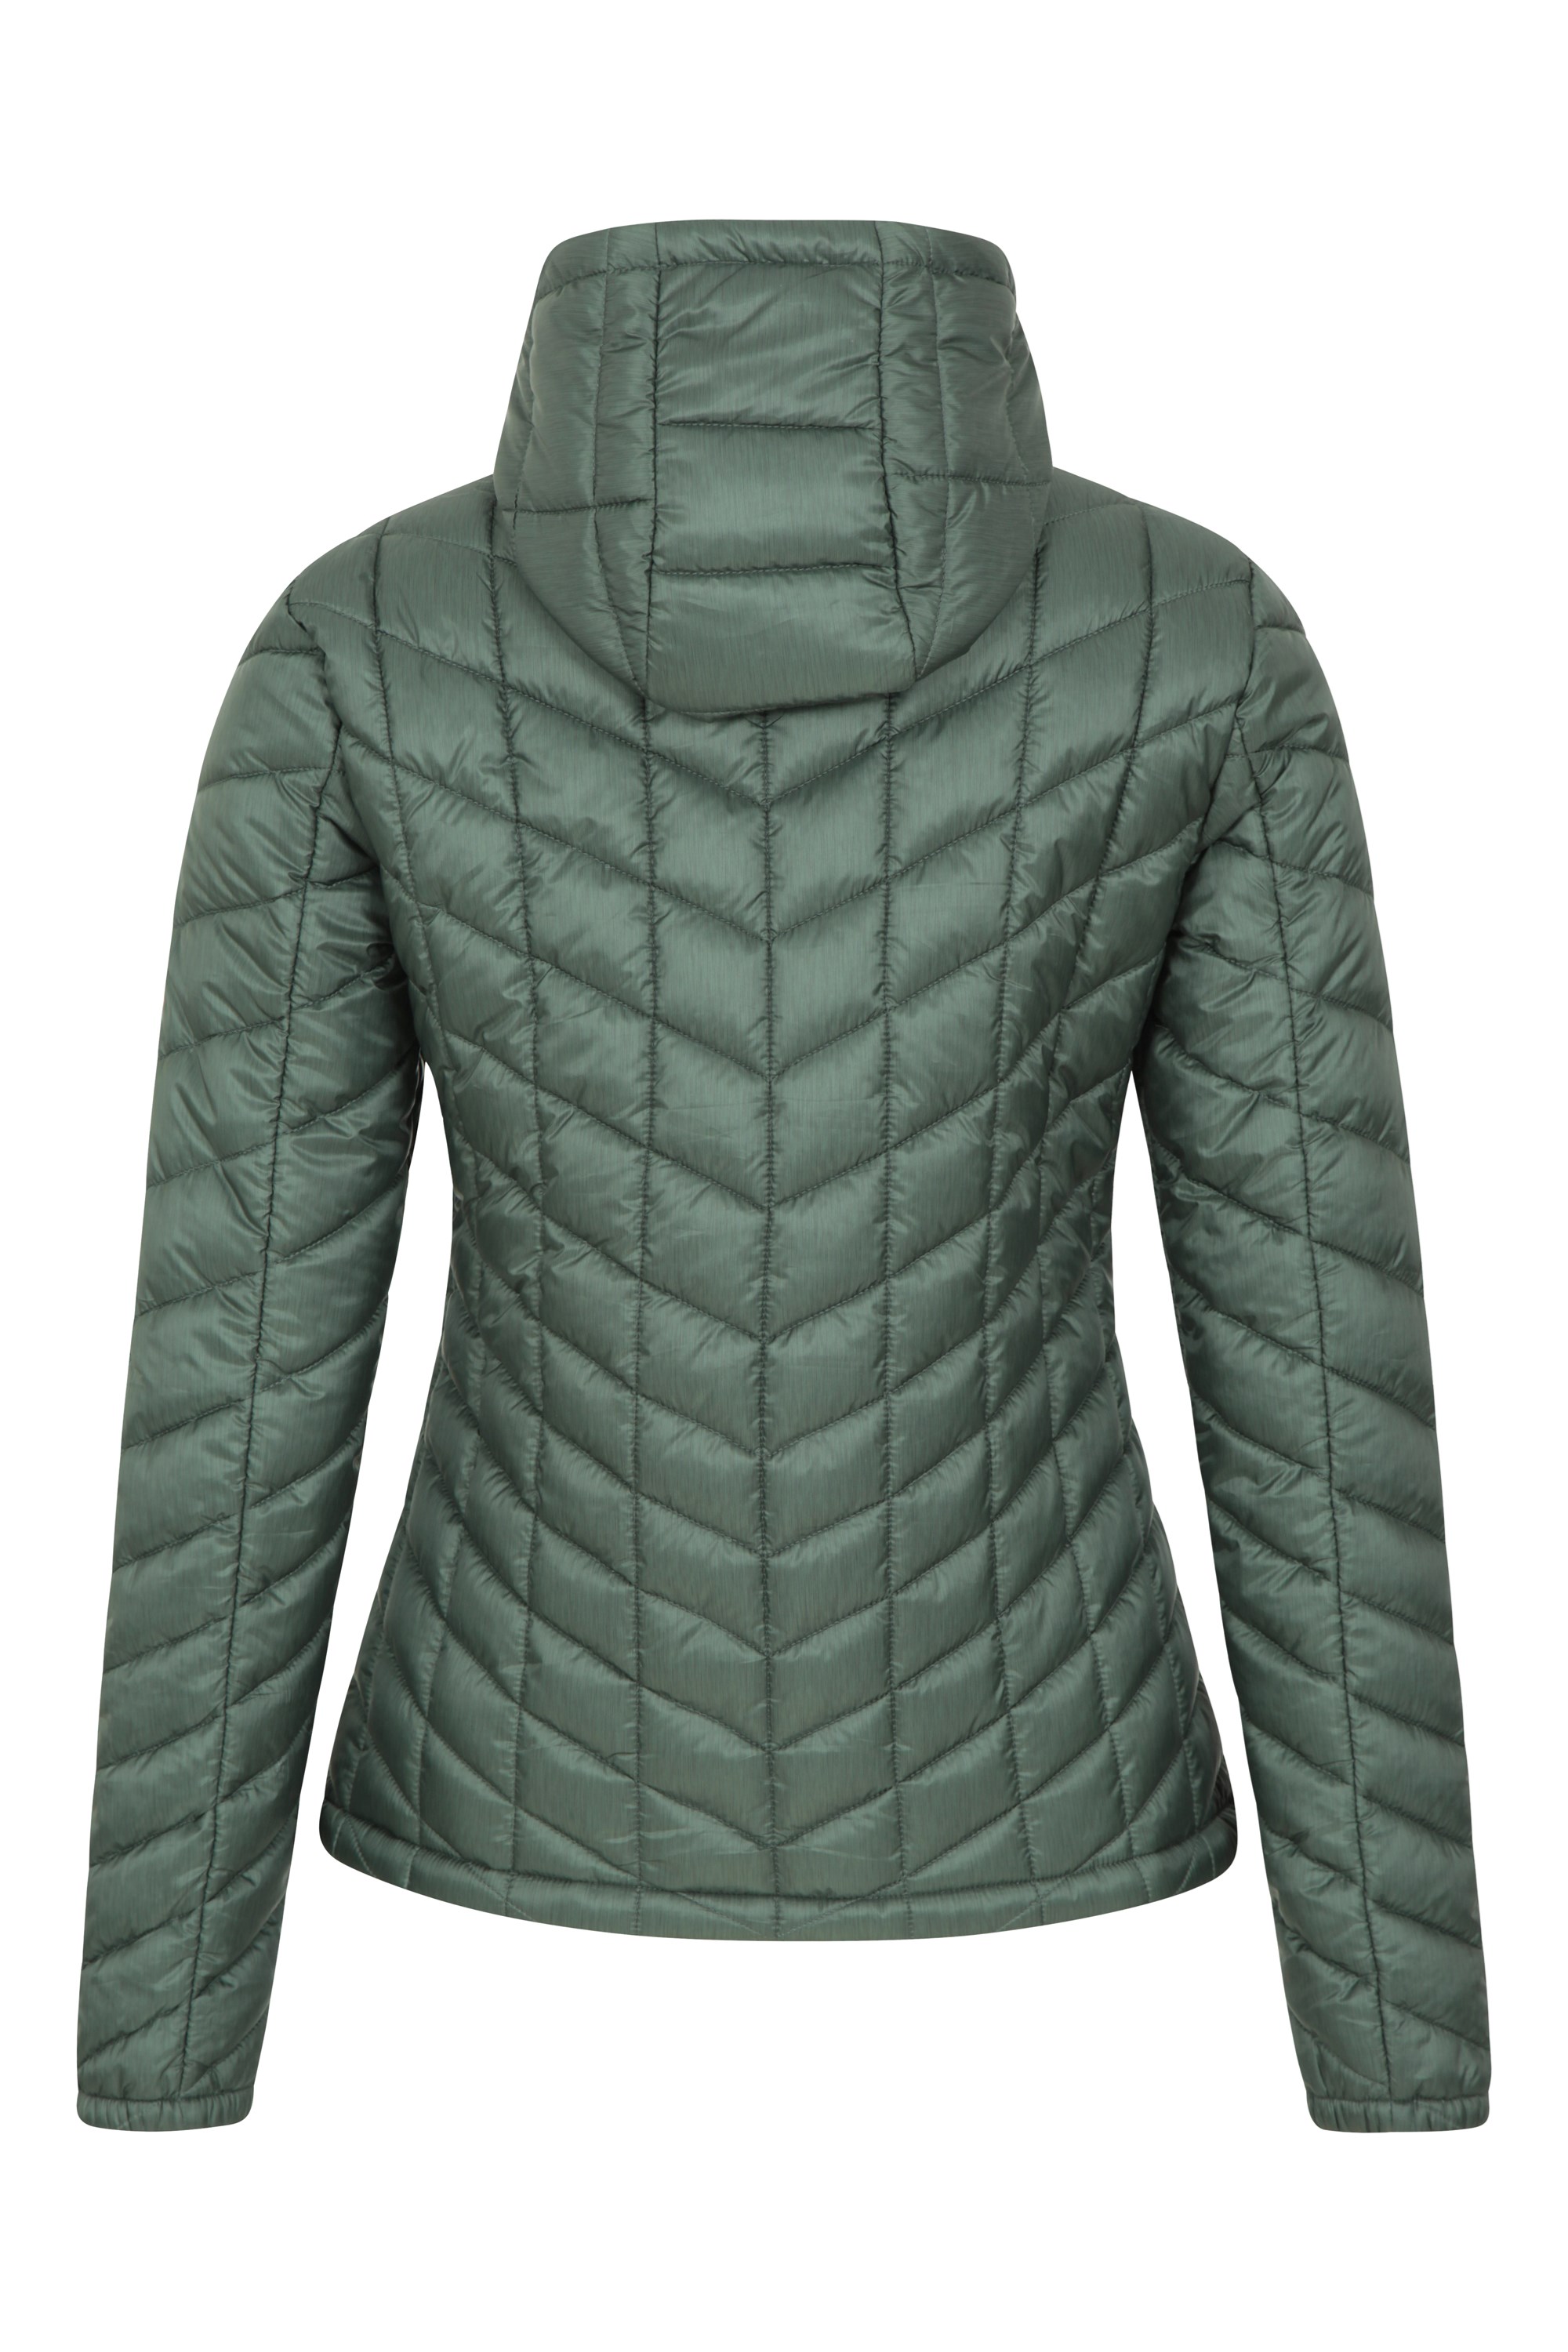 Mountain Warehouse Mountain Warehouse Womens Speed Padded Jacket Ladies Waterproof Microfibre Coat 